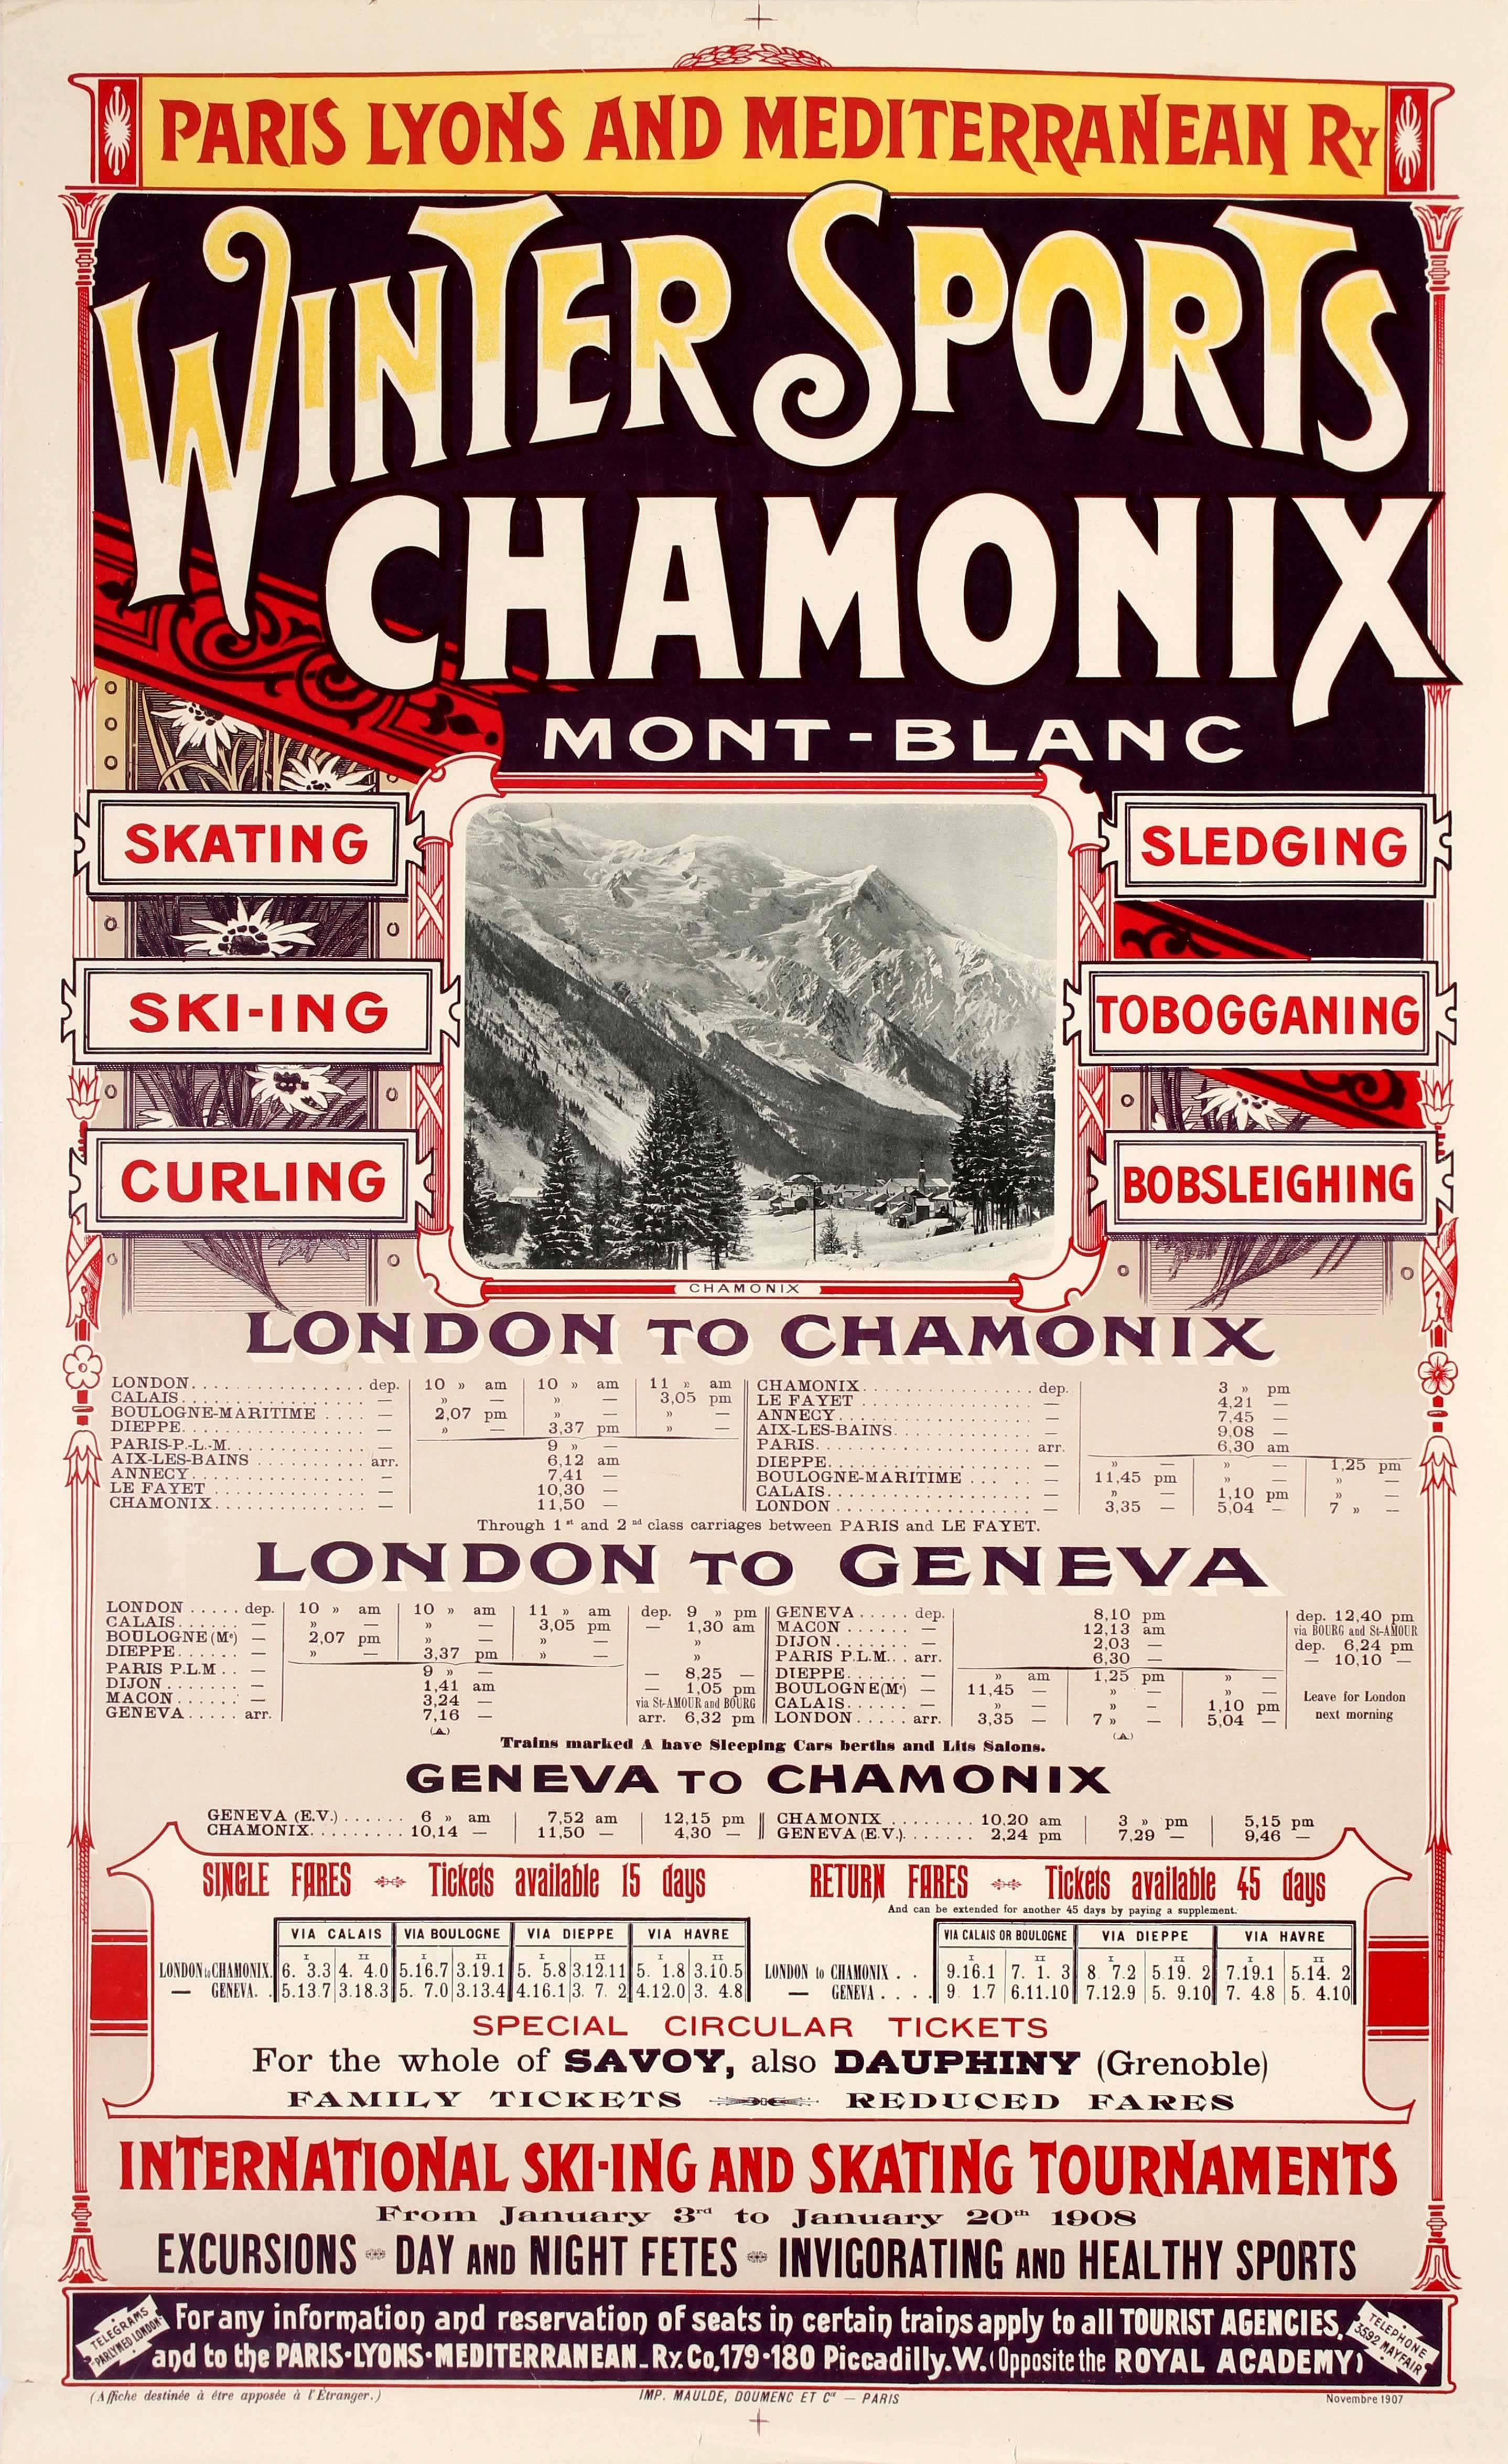 Original Antique PLM Railway Poster - Skiing & Winter Sports Chamonix Mont Blanc